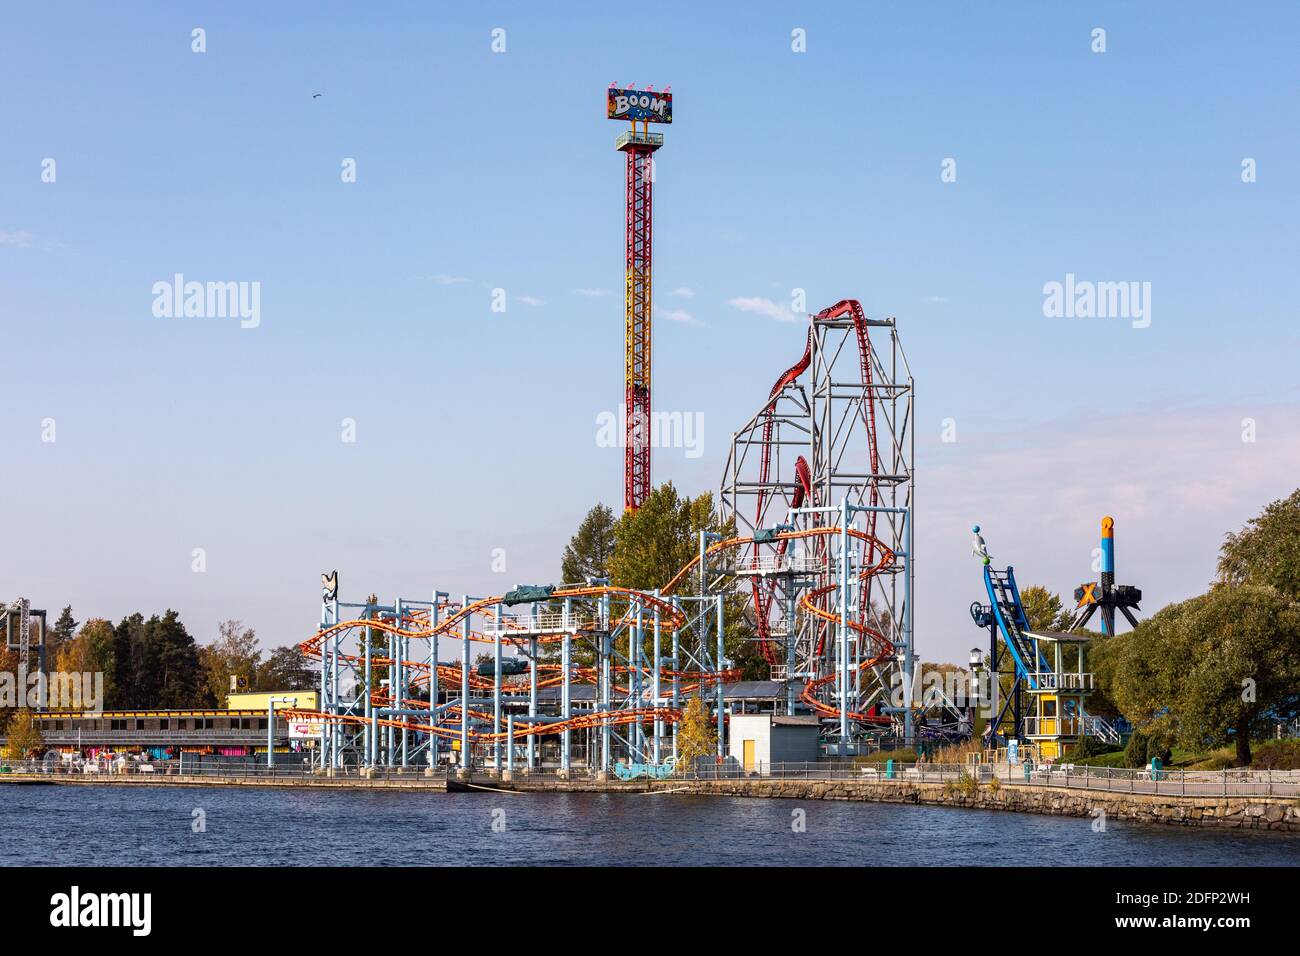 Särkänniemi amusement park closed after summer season in Tampere, Finland Stock Photo